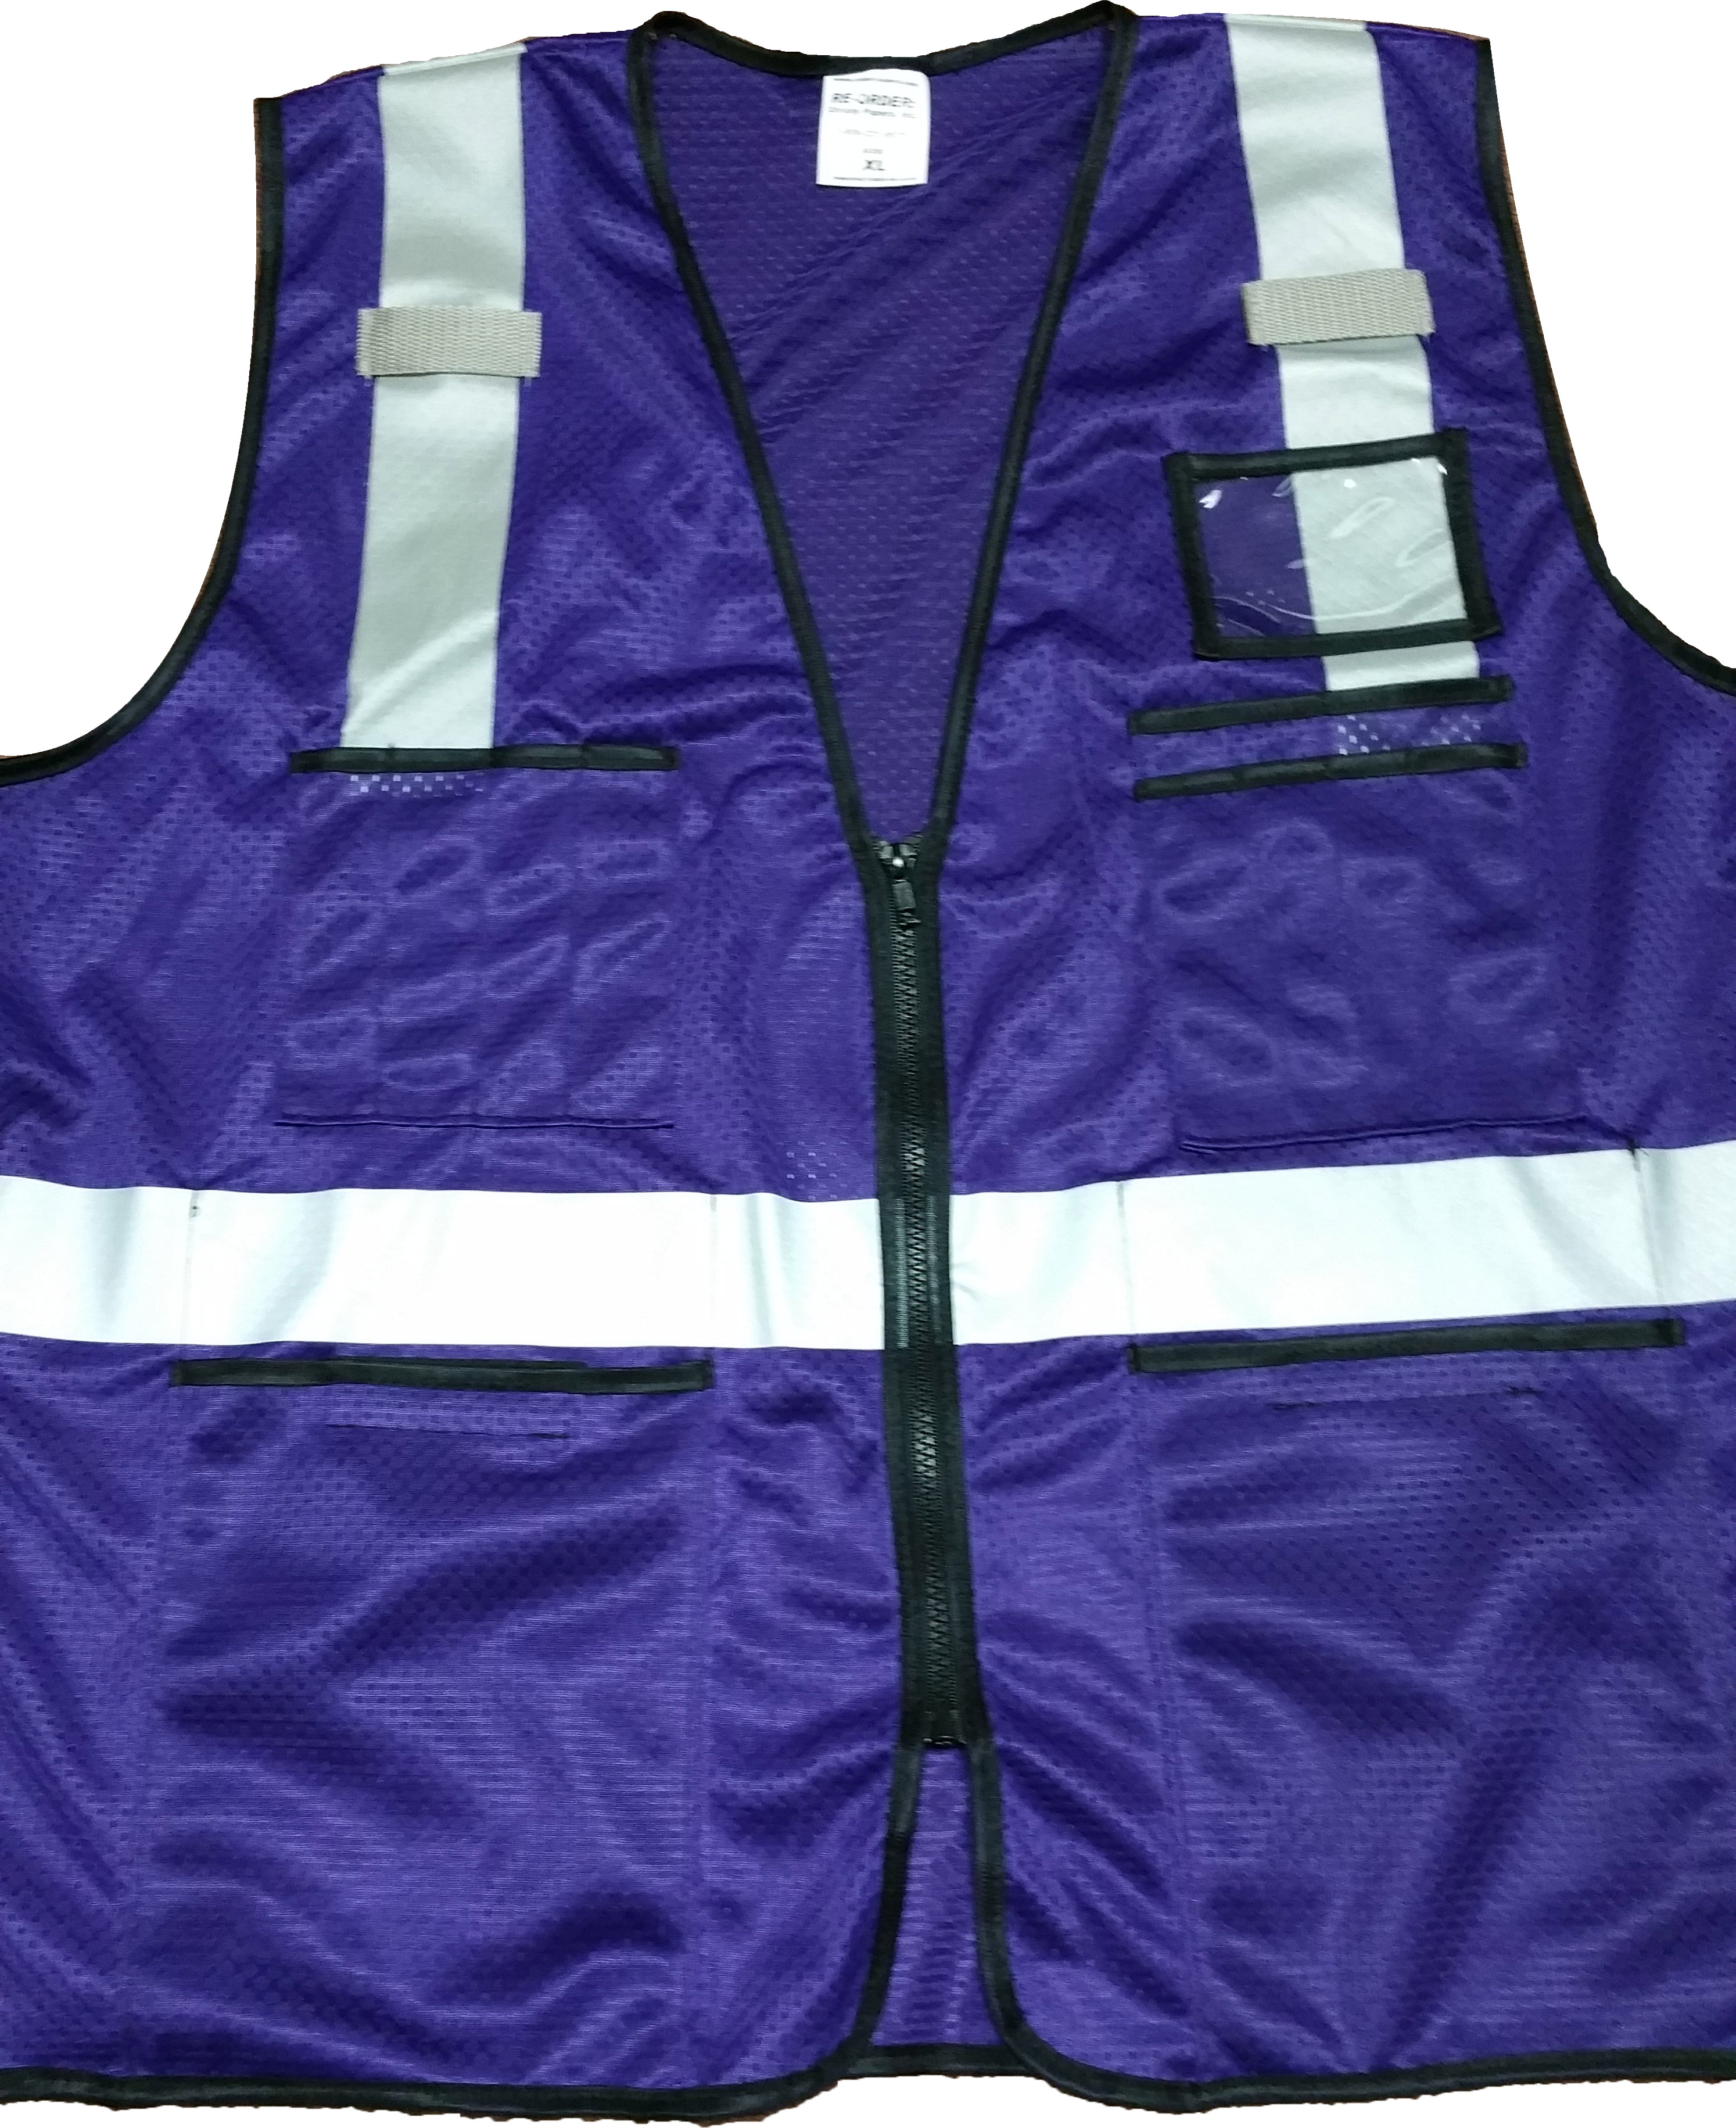 Safety Vests - 350-0110007 - Royal Purple Mesh Safety Vest with Silver Hi-Gloss